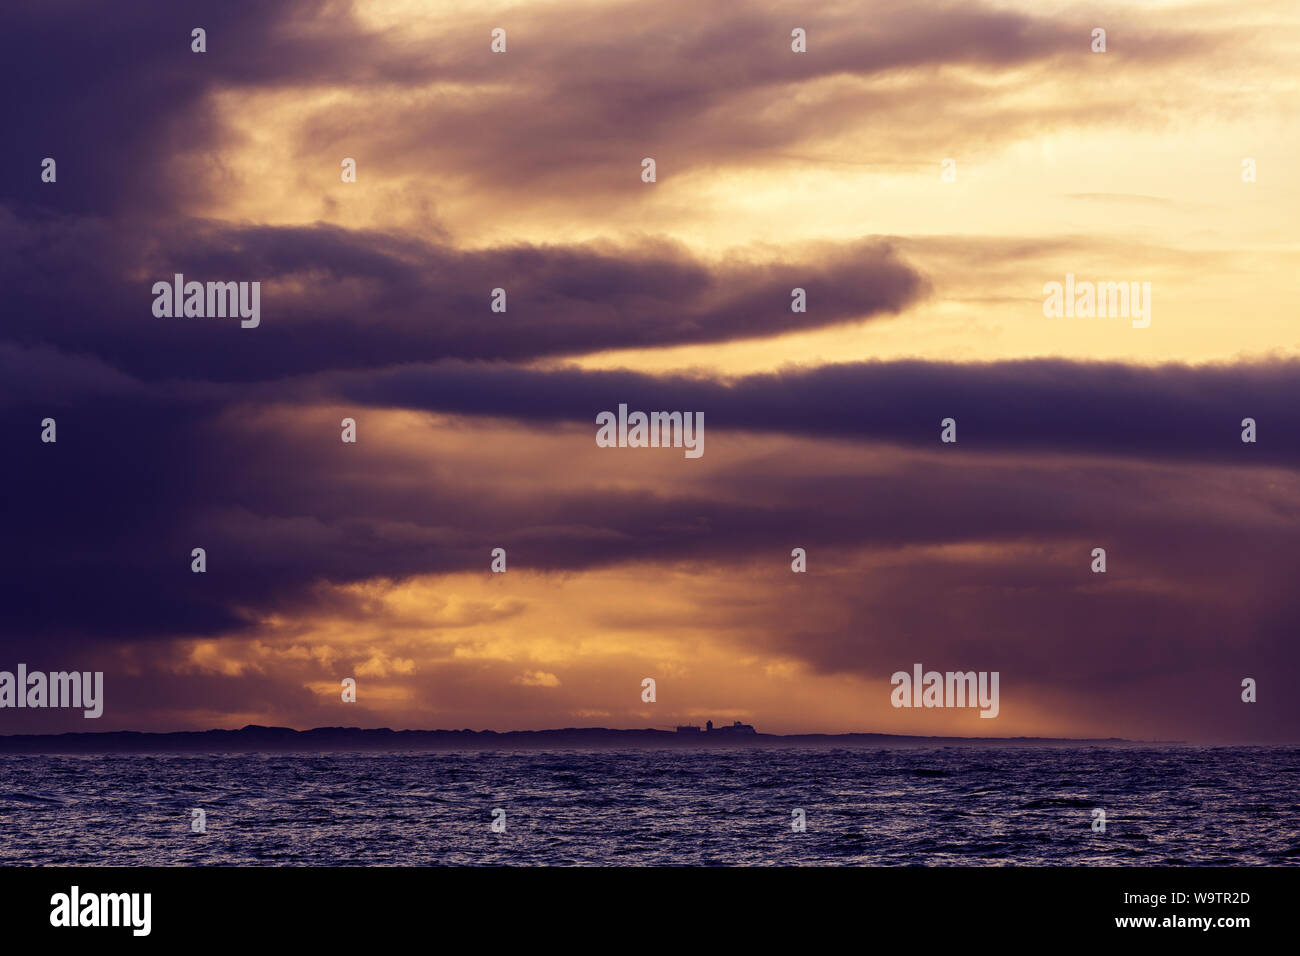 Norderney, Weststrand, Meer, Himmel, Wolken, Sonnenuntergang, Insel Juist, blaue Stunde Foto Stock